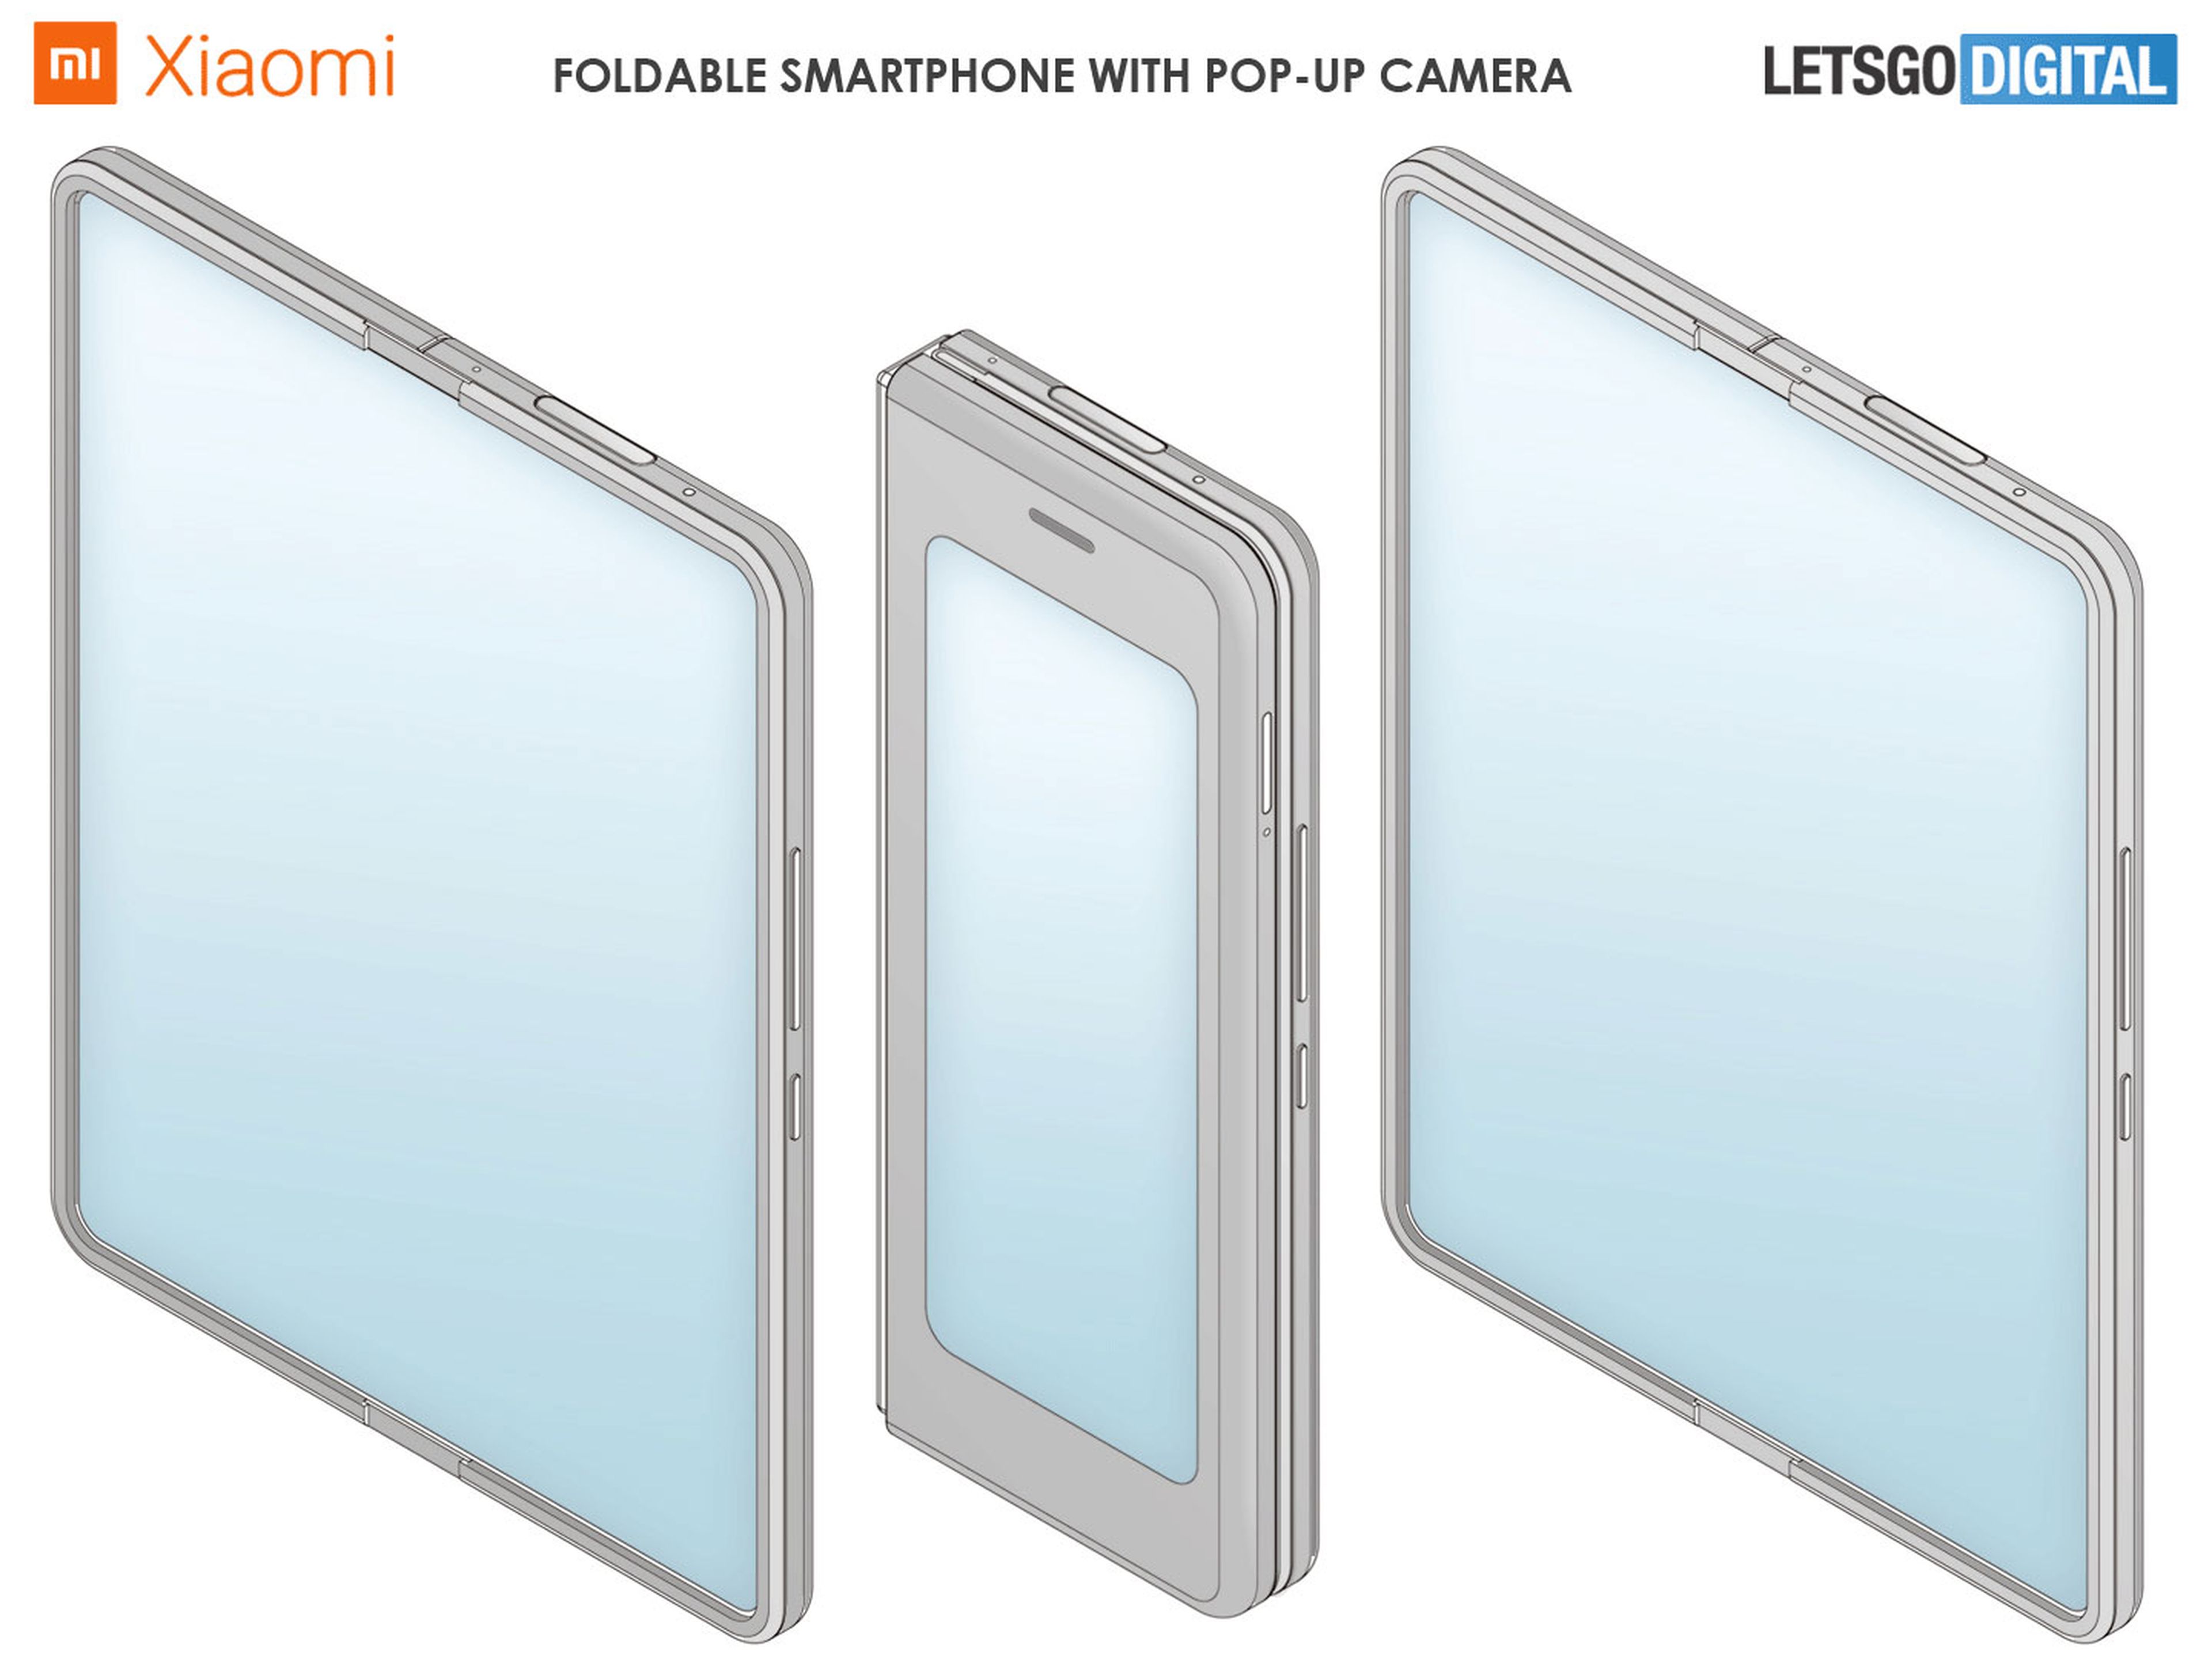 Patente teléfono plegable Xiaomi